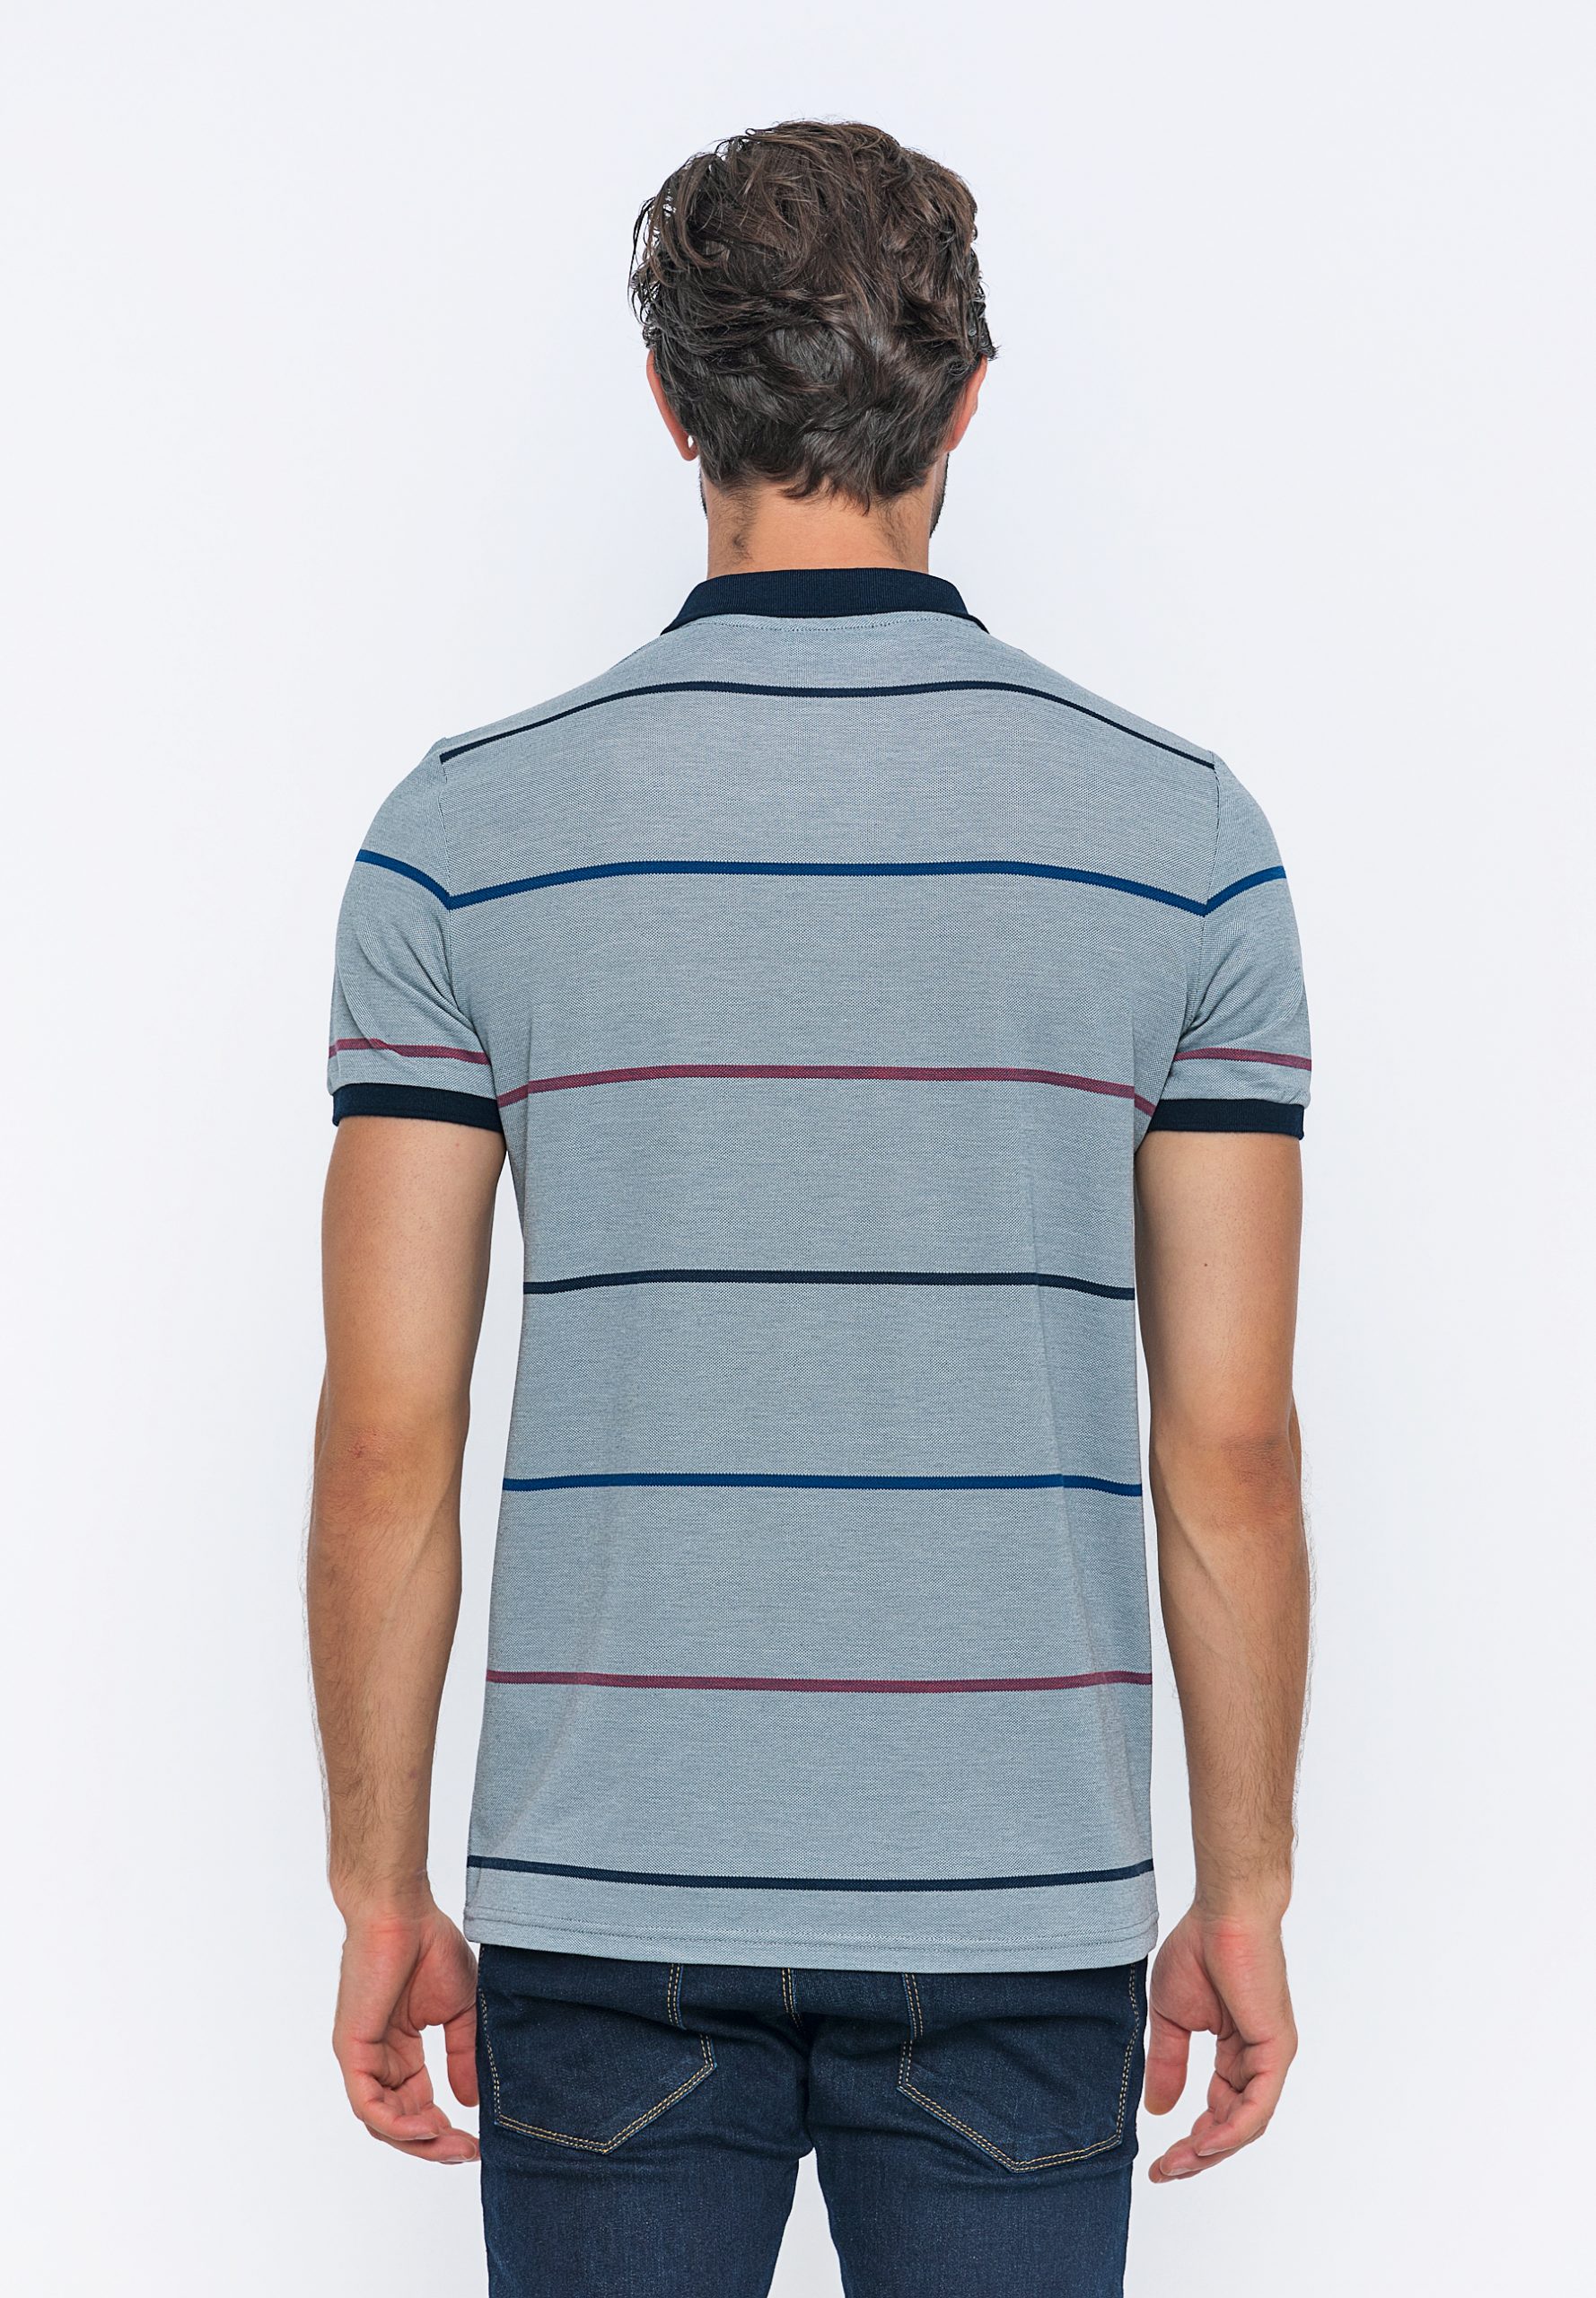 Men's Polo Shirt Short Sleeve - Basics&More